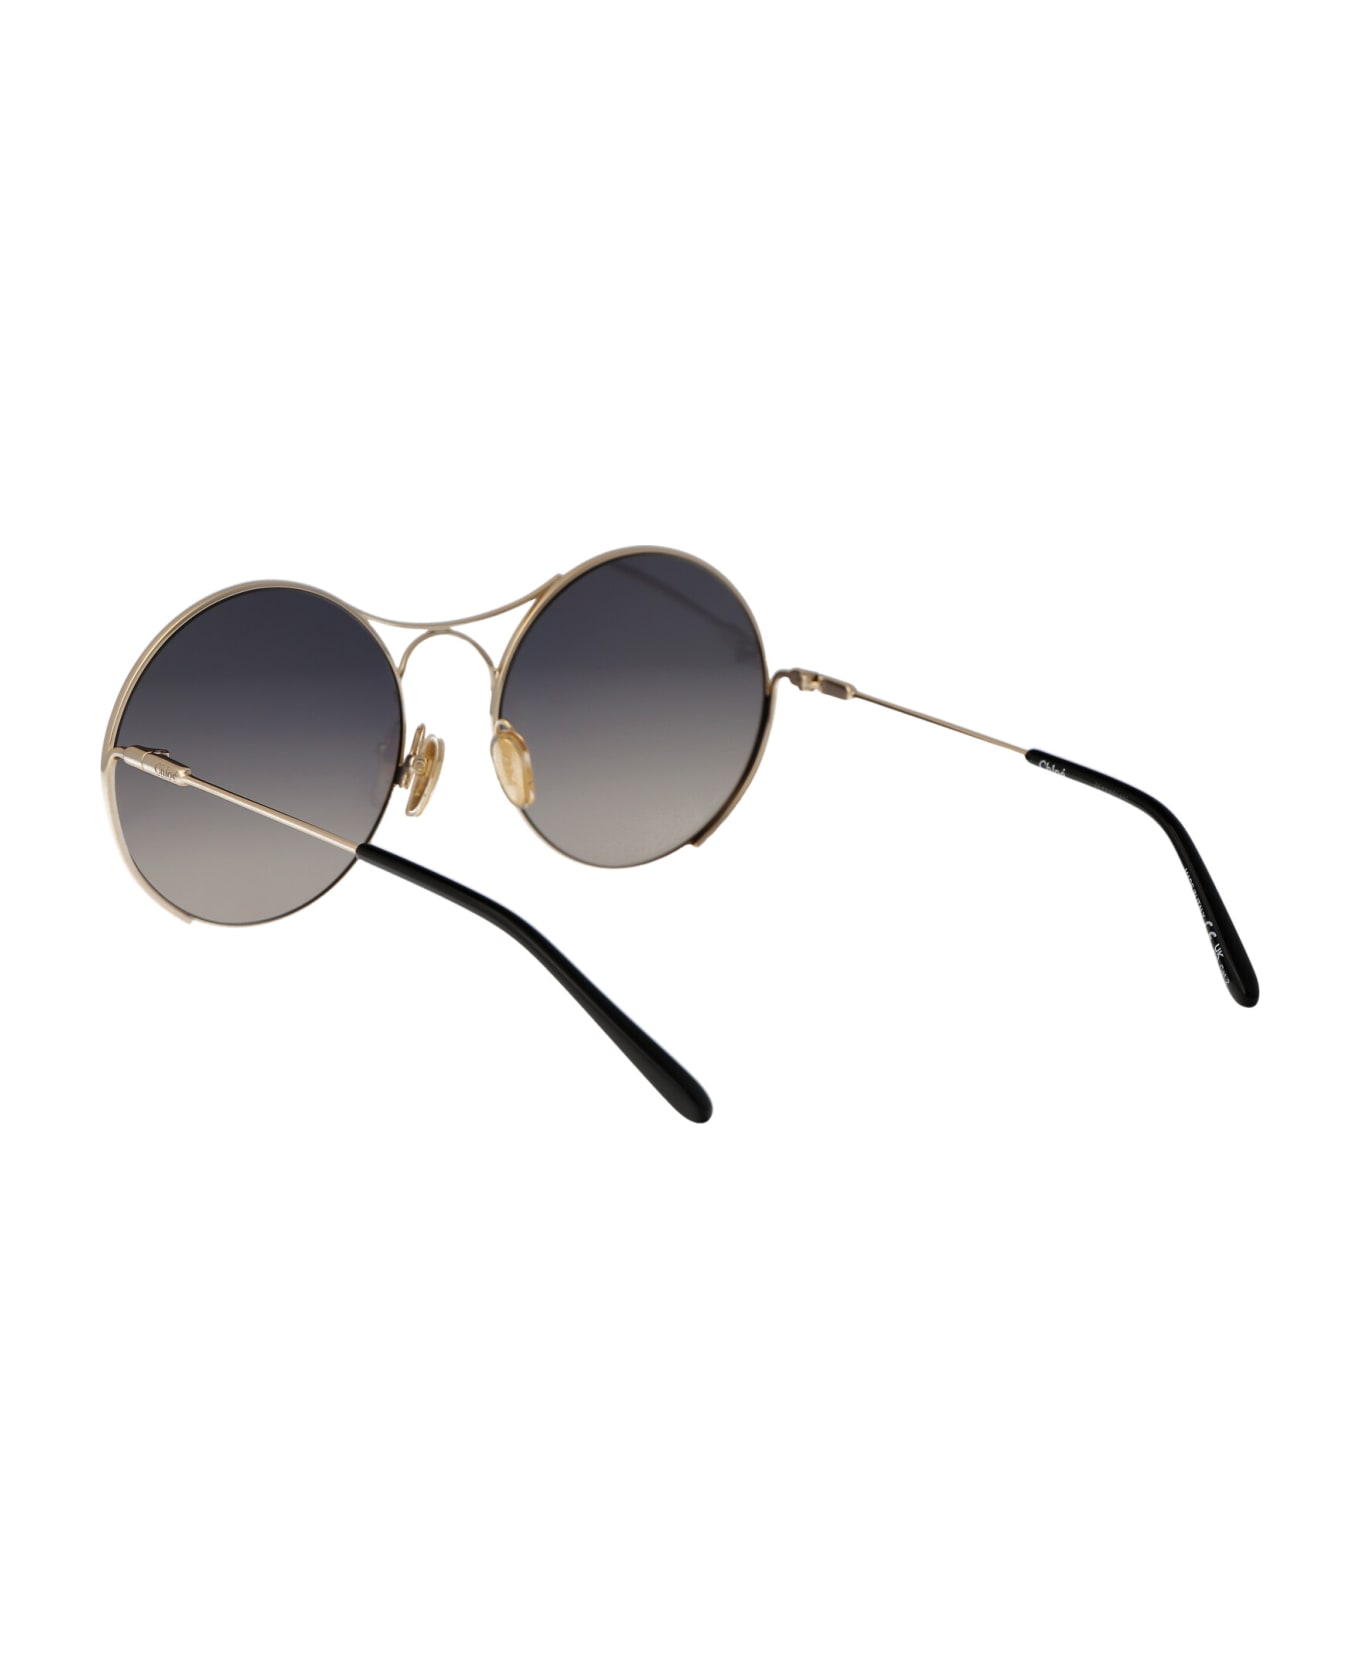 Chloé Eyewear Ch0166s Sunglasses - 001 GOLD GOLD GREY サングラス